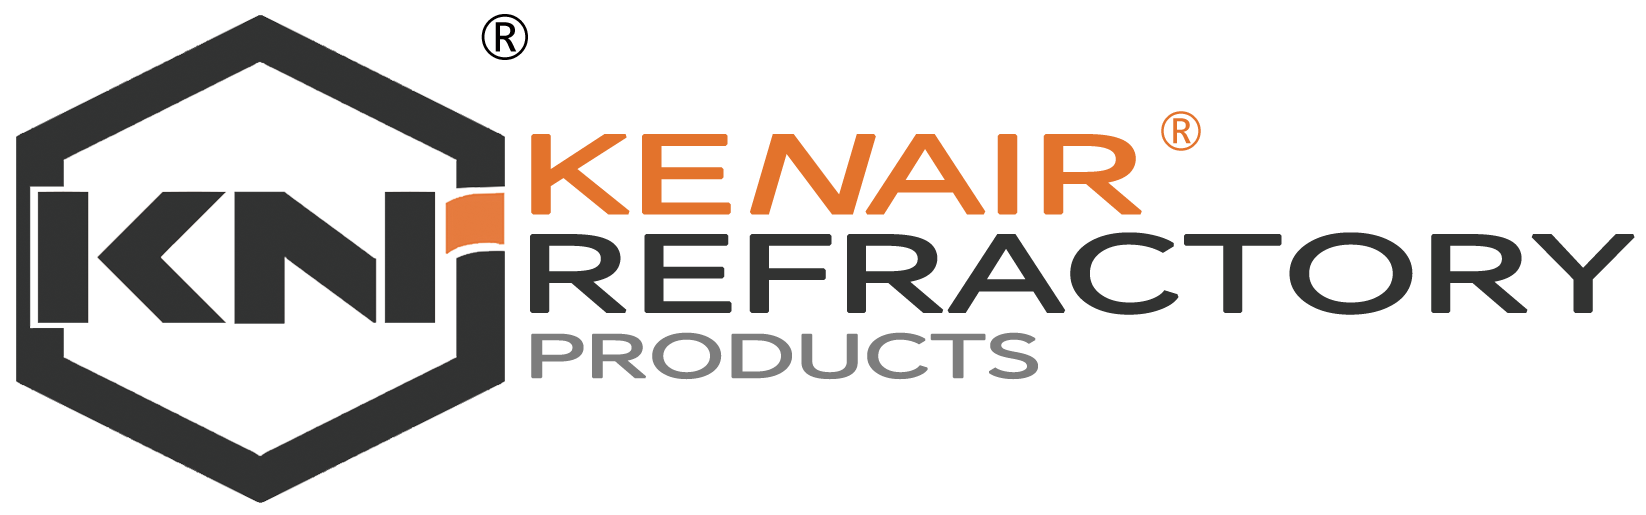 Kenair Refractory Products (Guangdong) Co., Ltd.